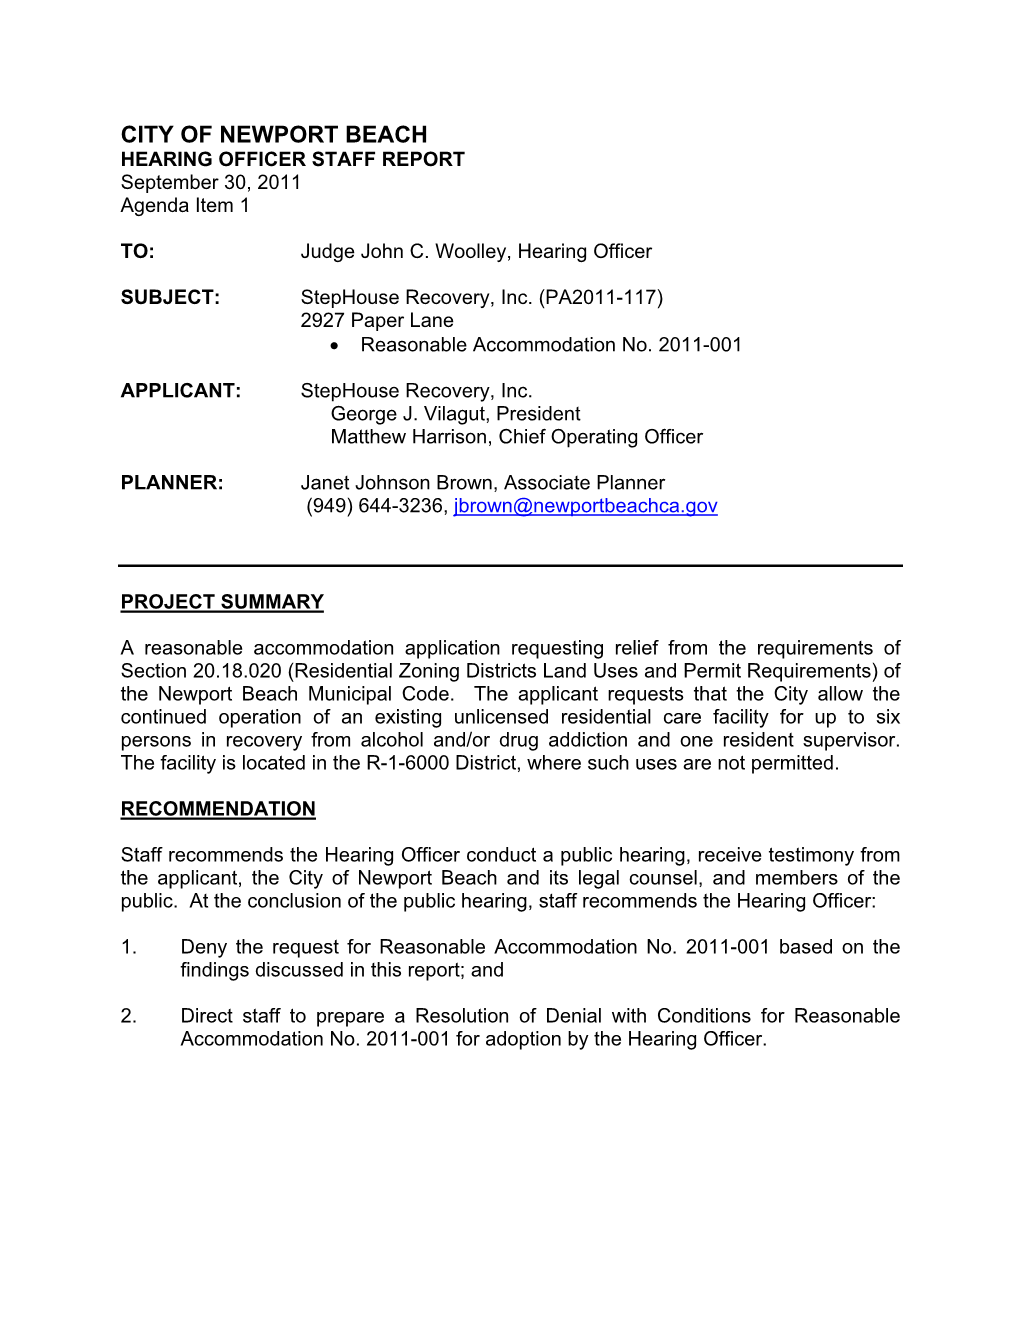 CITY of NEWPORT BEACH HEARING OFFICER STAFF REPORT September 30, 2011 Agenda Item 1